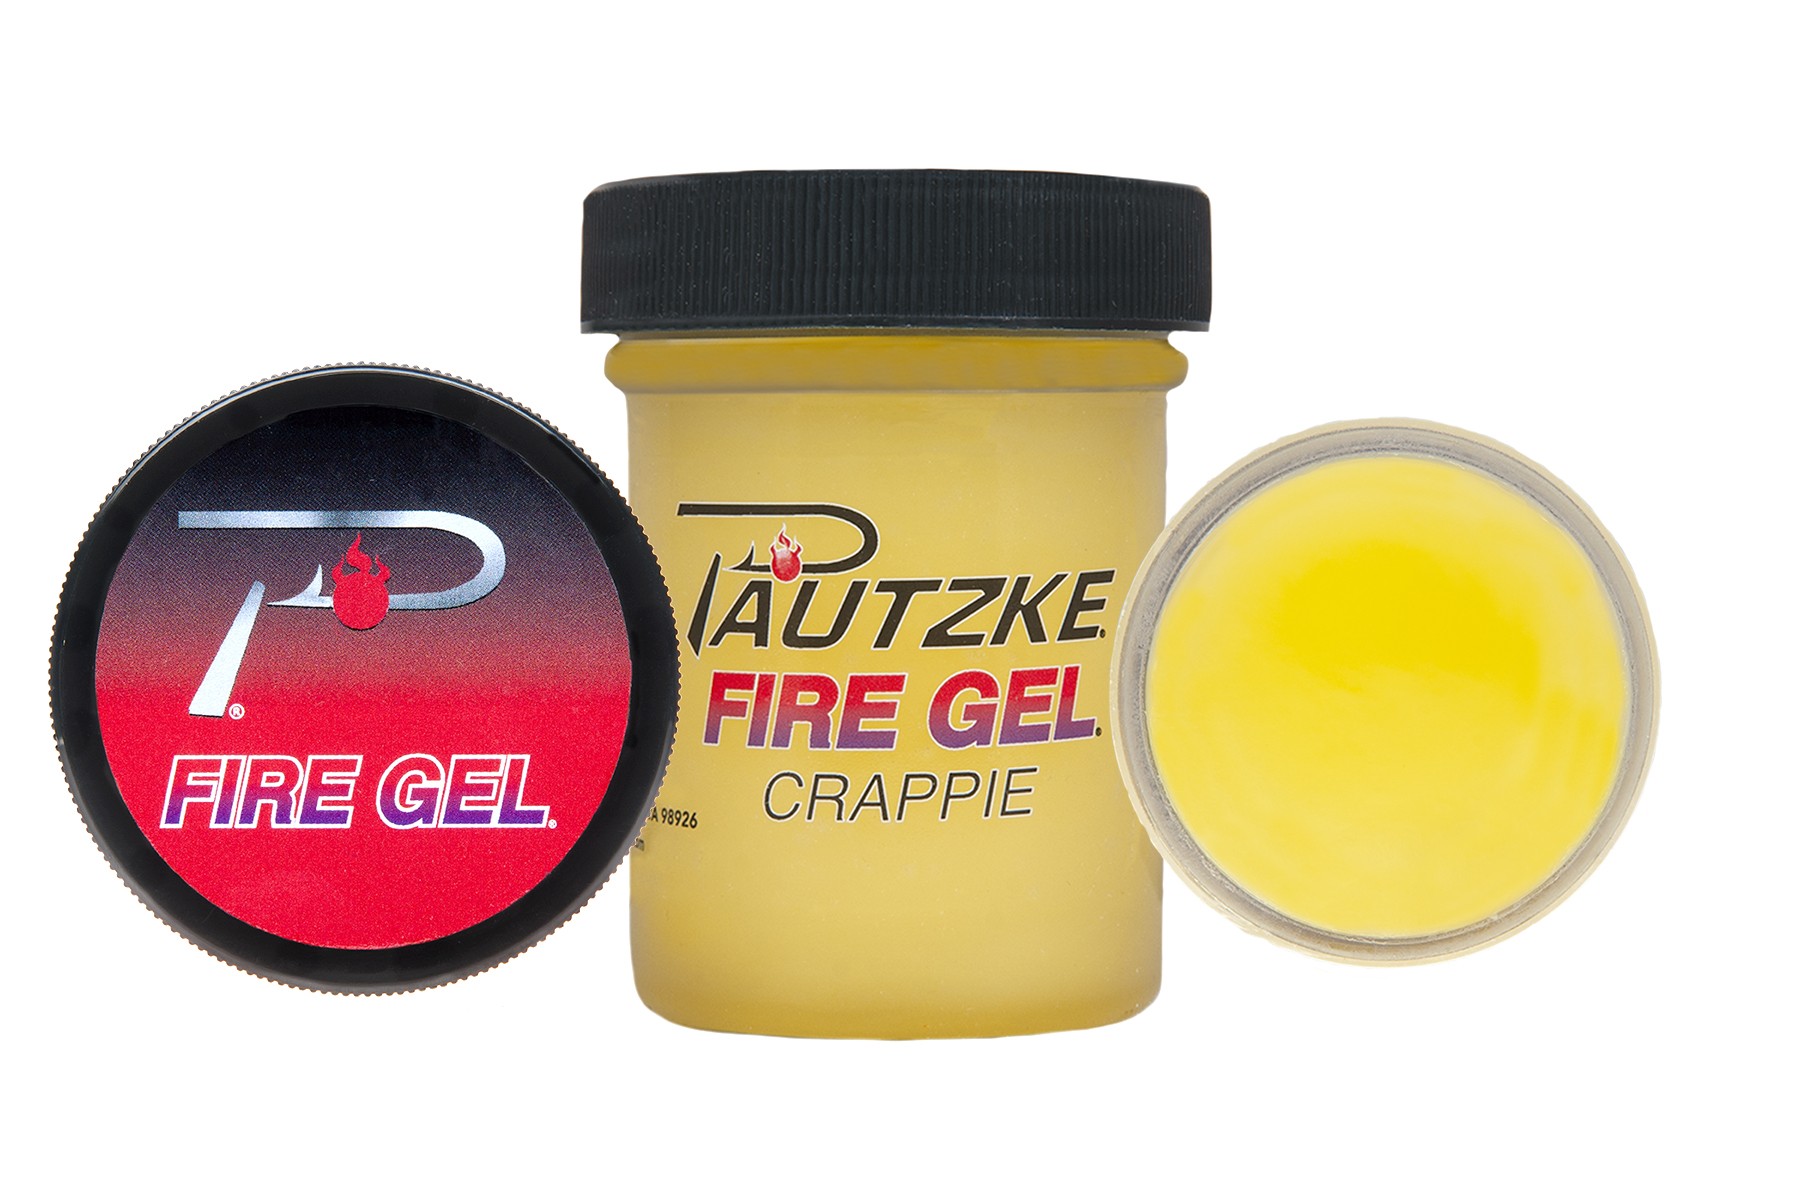 Pautzke Fire Gel Attractant 1.65oz. (Crappie)